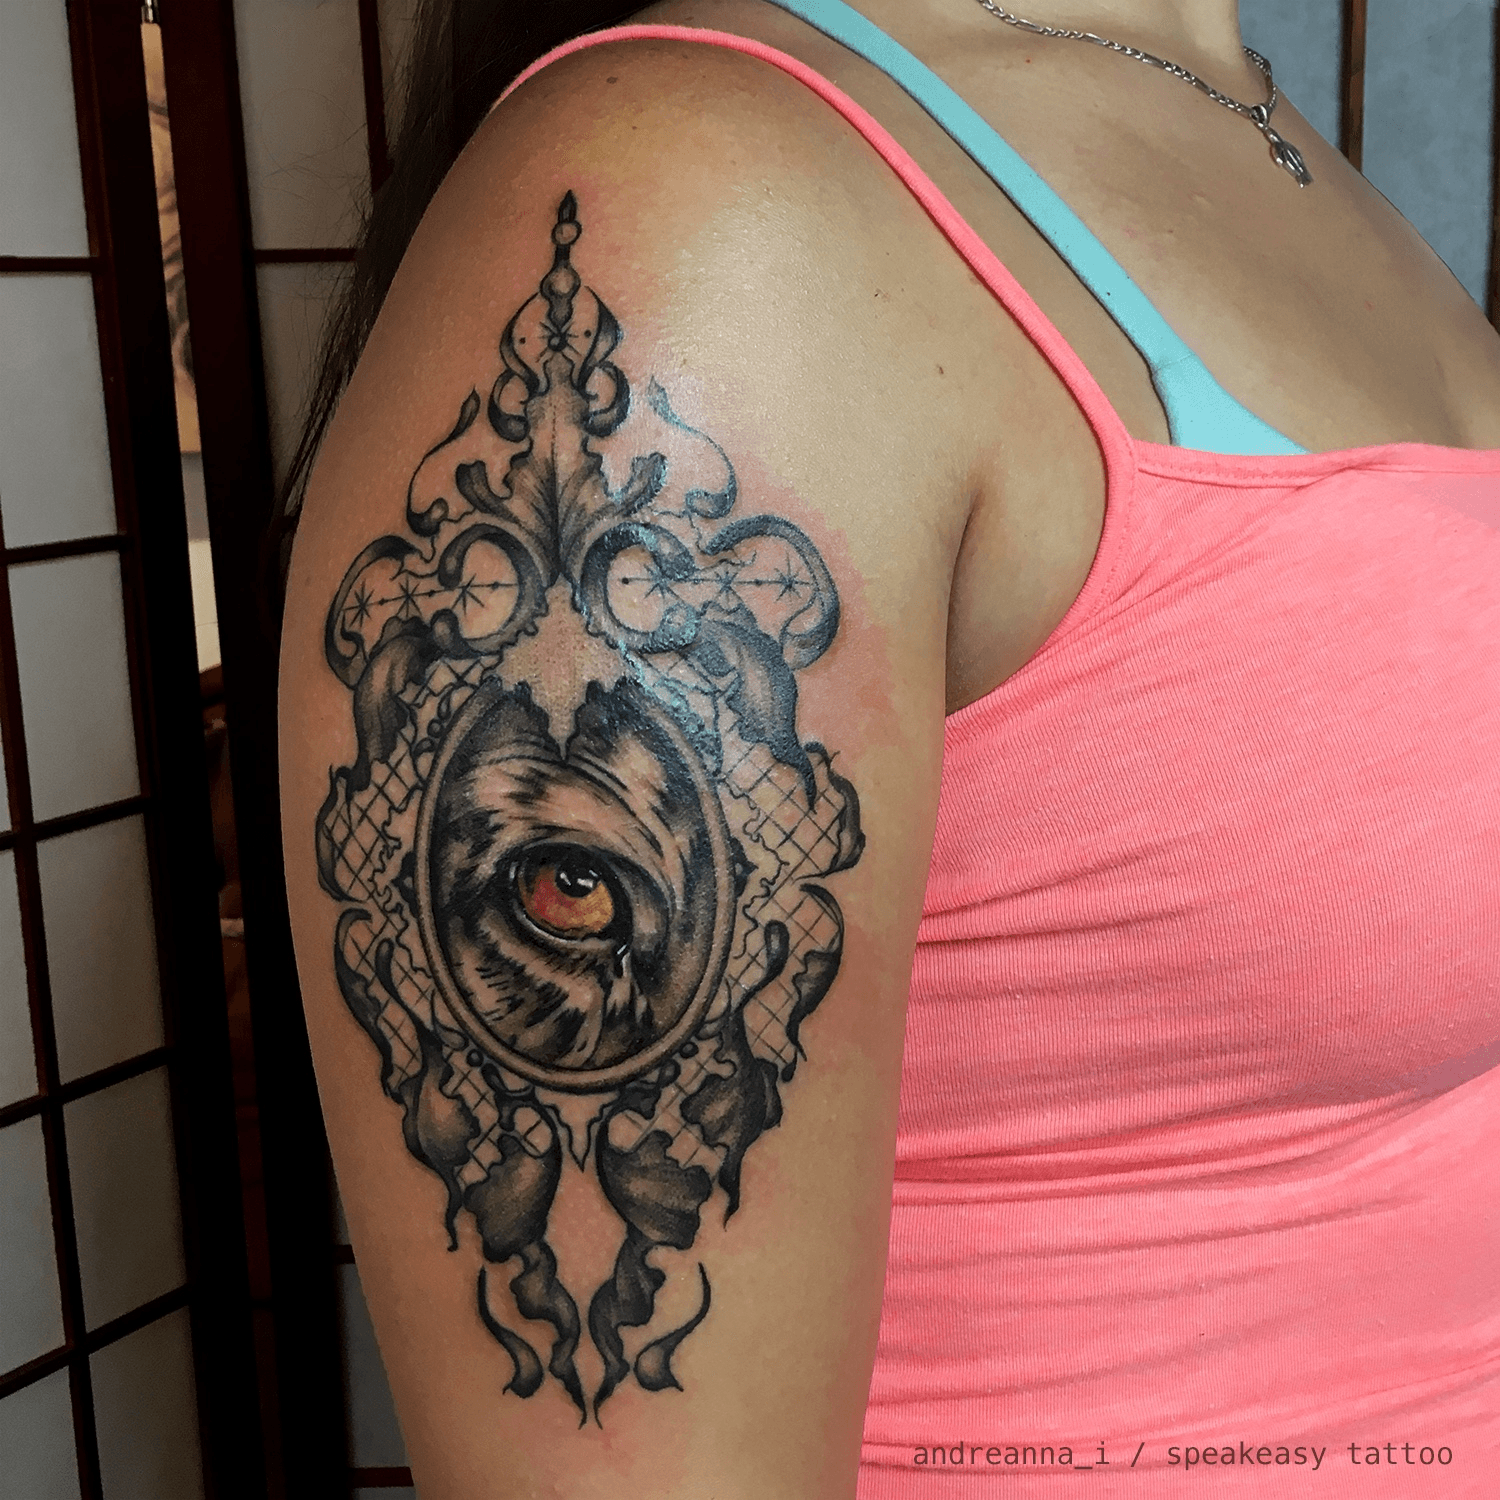 Roses and filigree tattoo